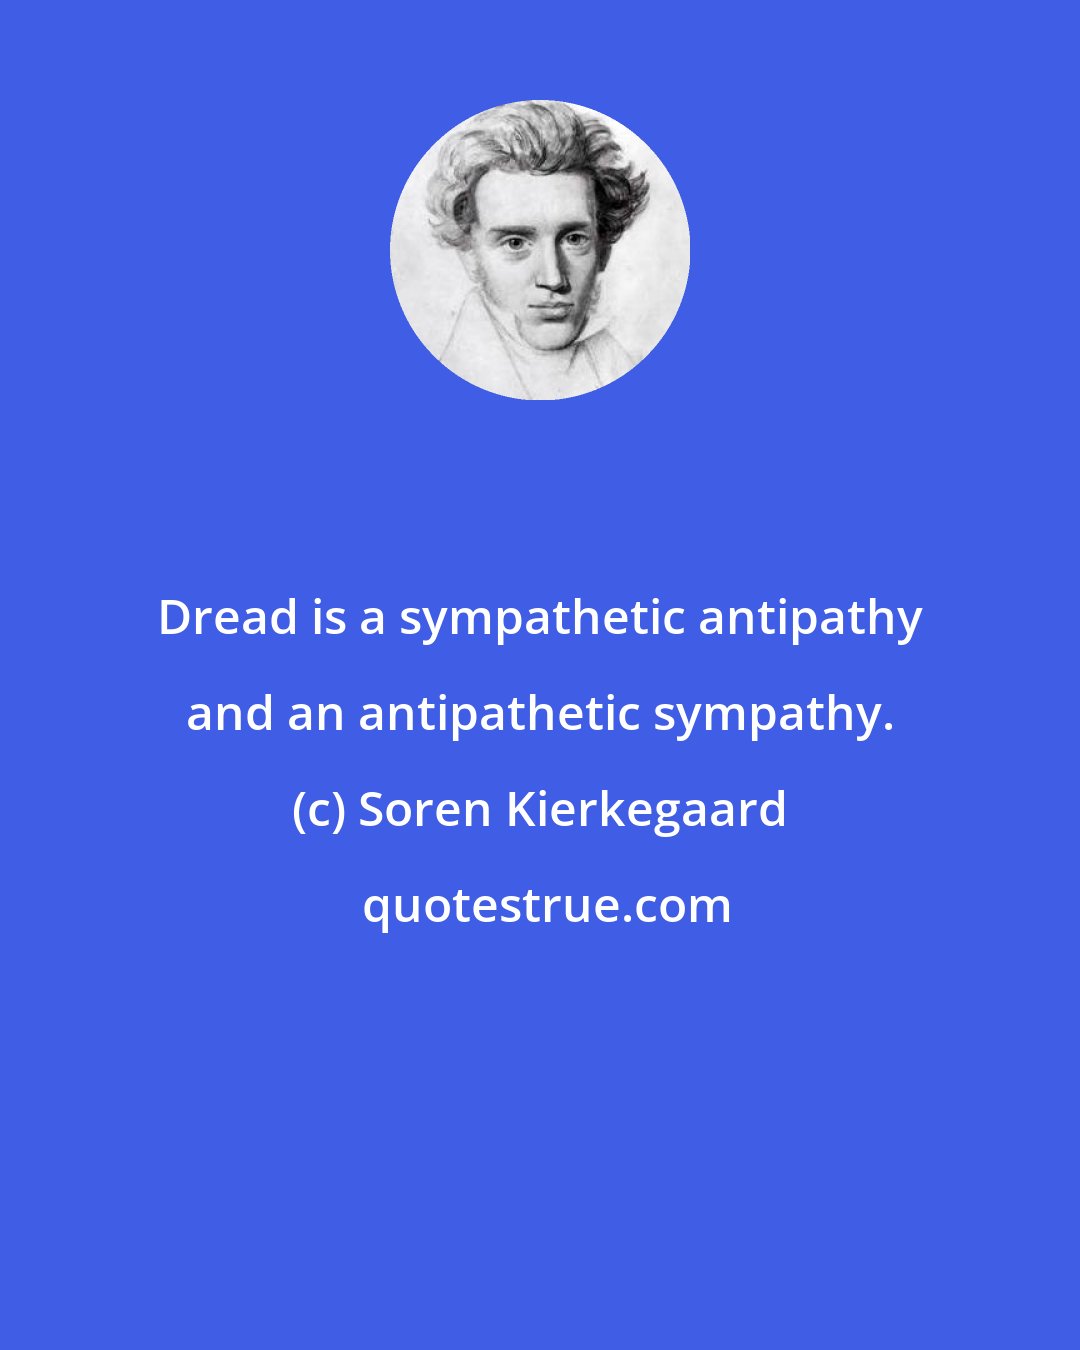 Soren Kierkegaard: Dread is a sympathetic antipathy and an antipathetic sympathy.